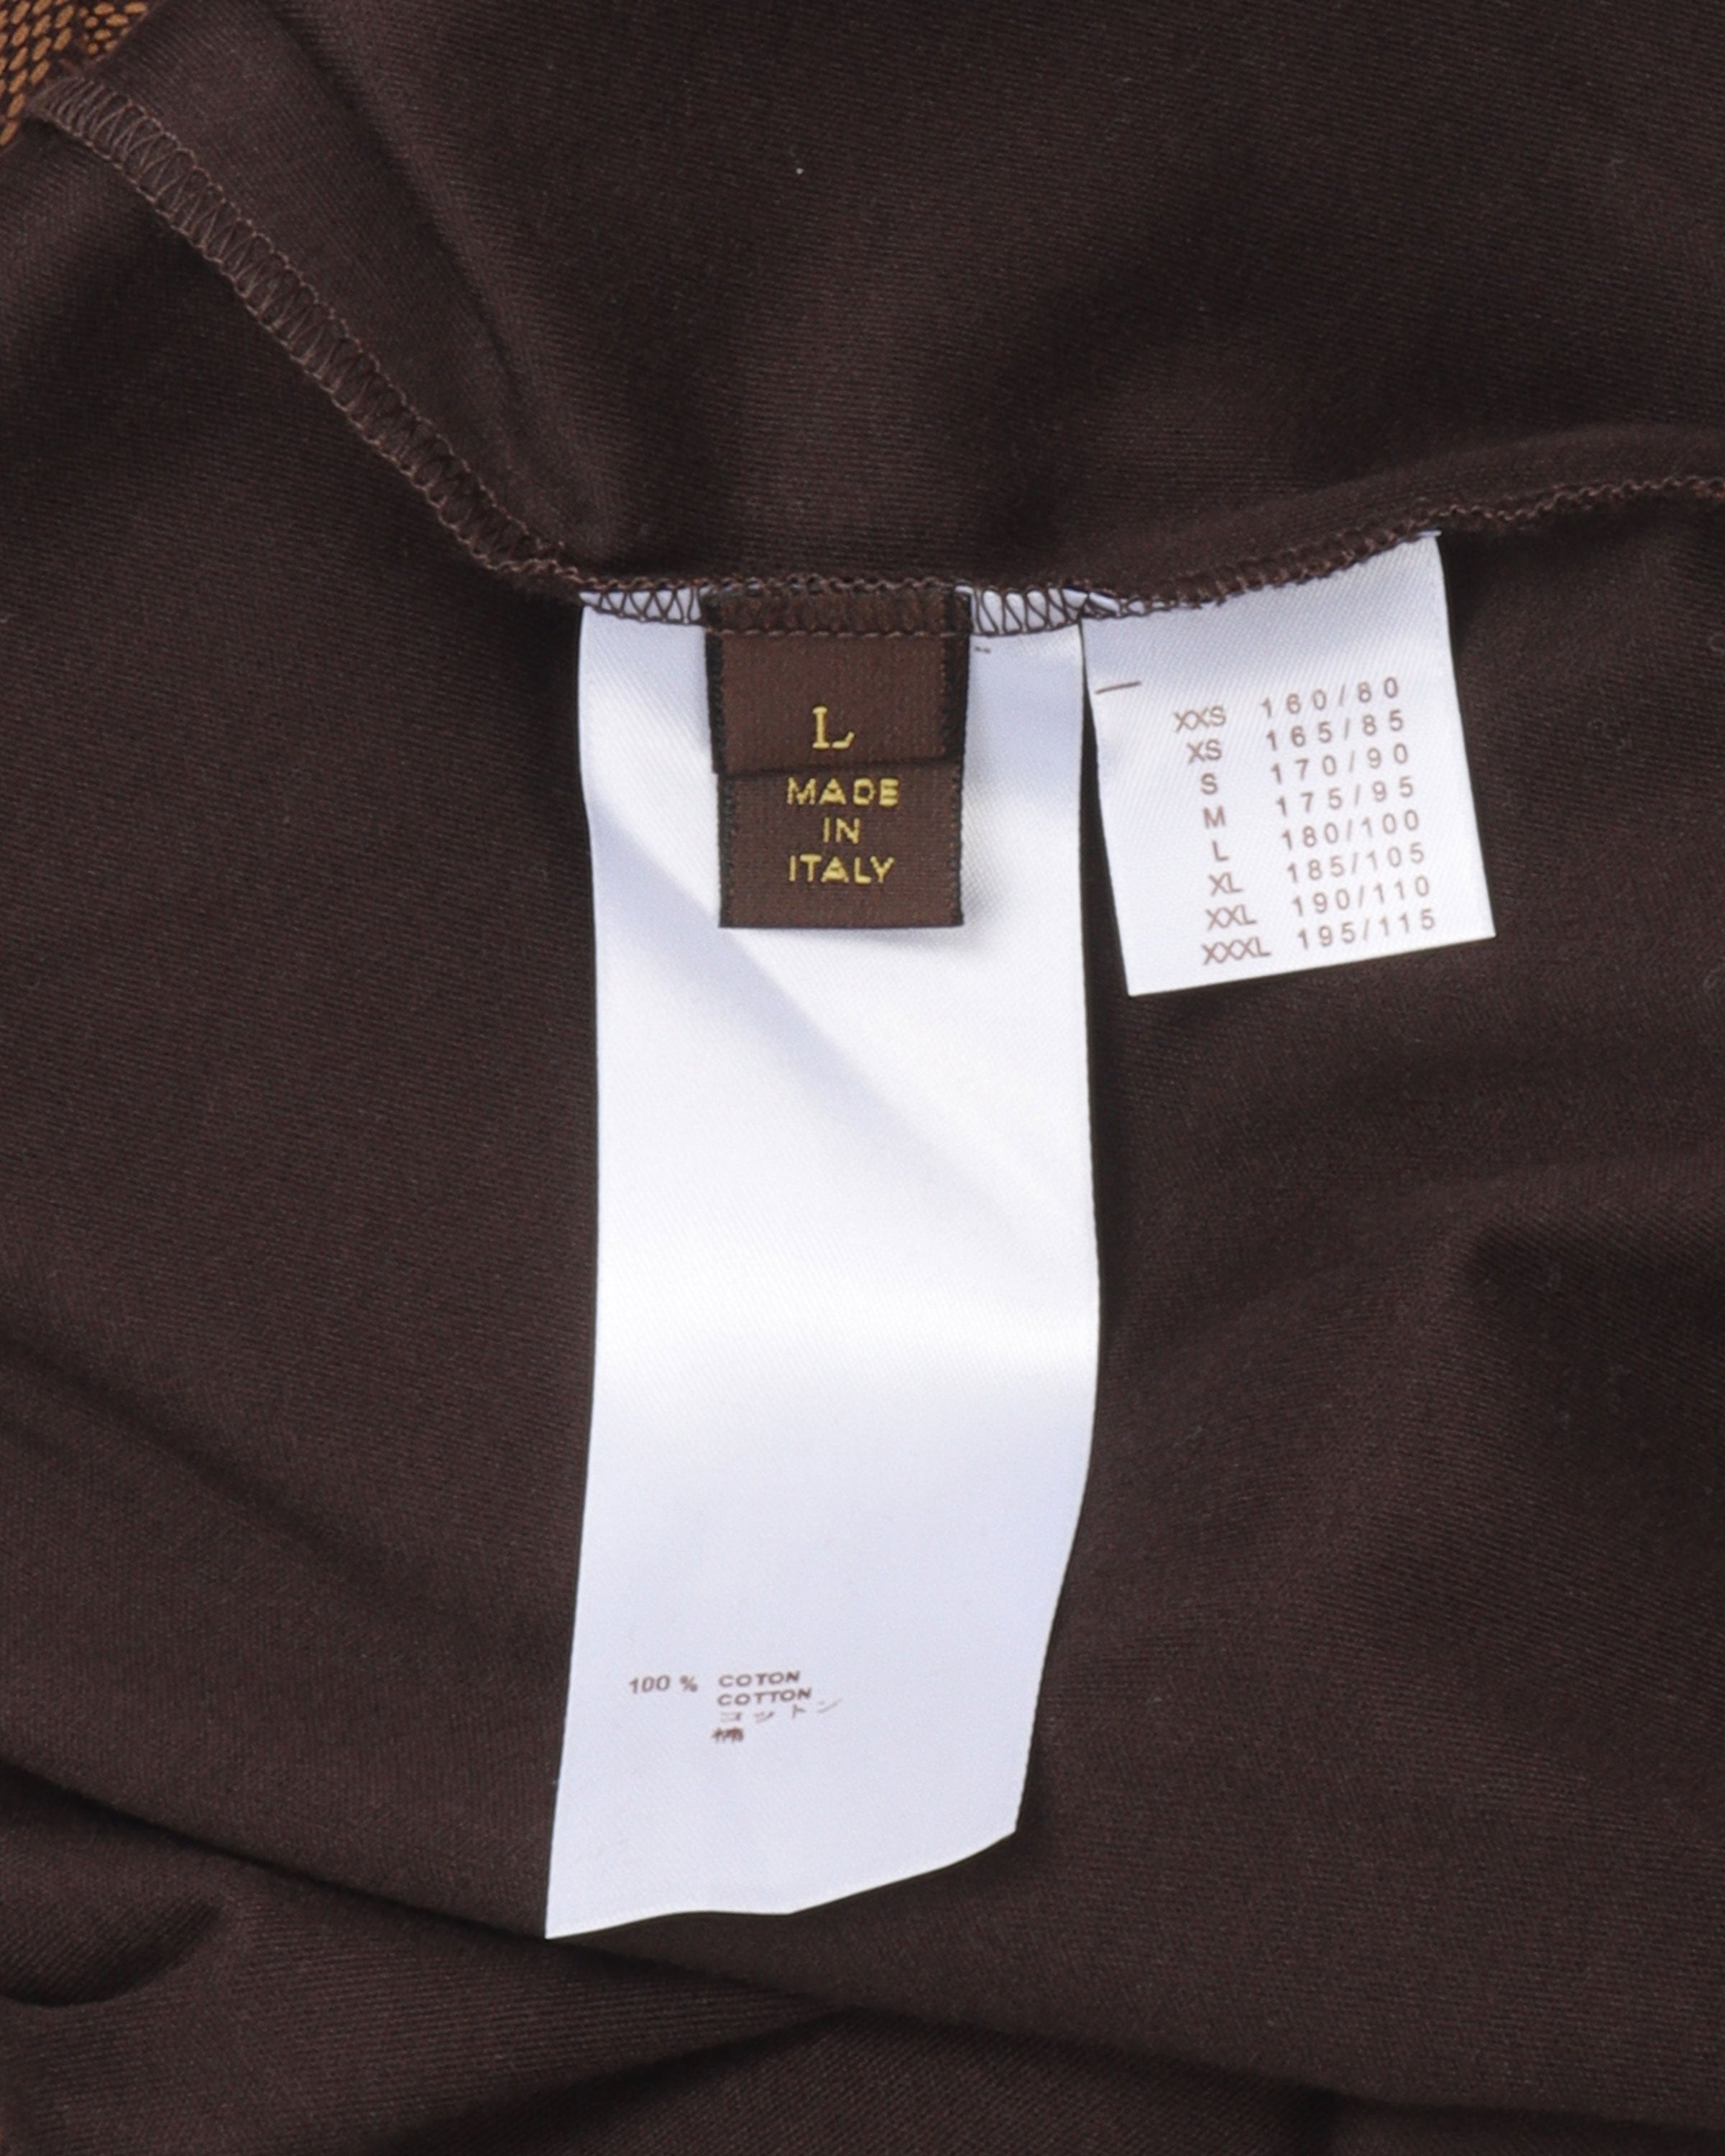 LOUIS VUITTON Damier Pattern Short-Sleeved T-Shirt size XS #JW49